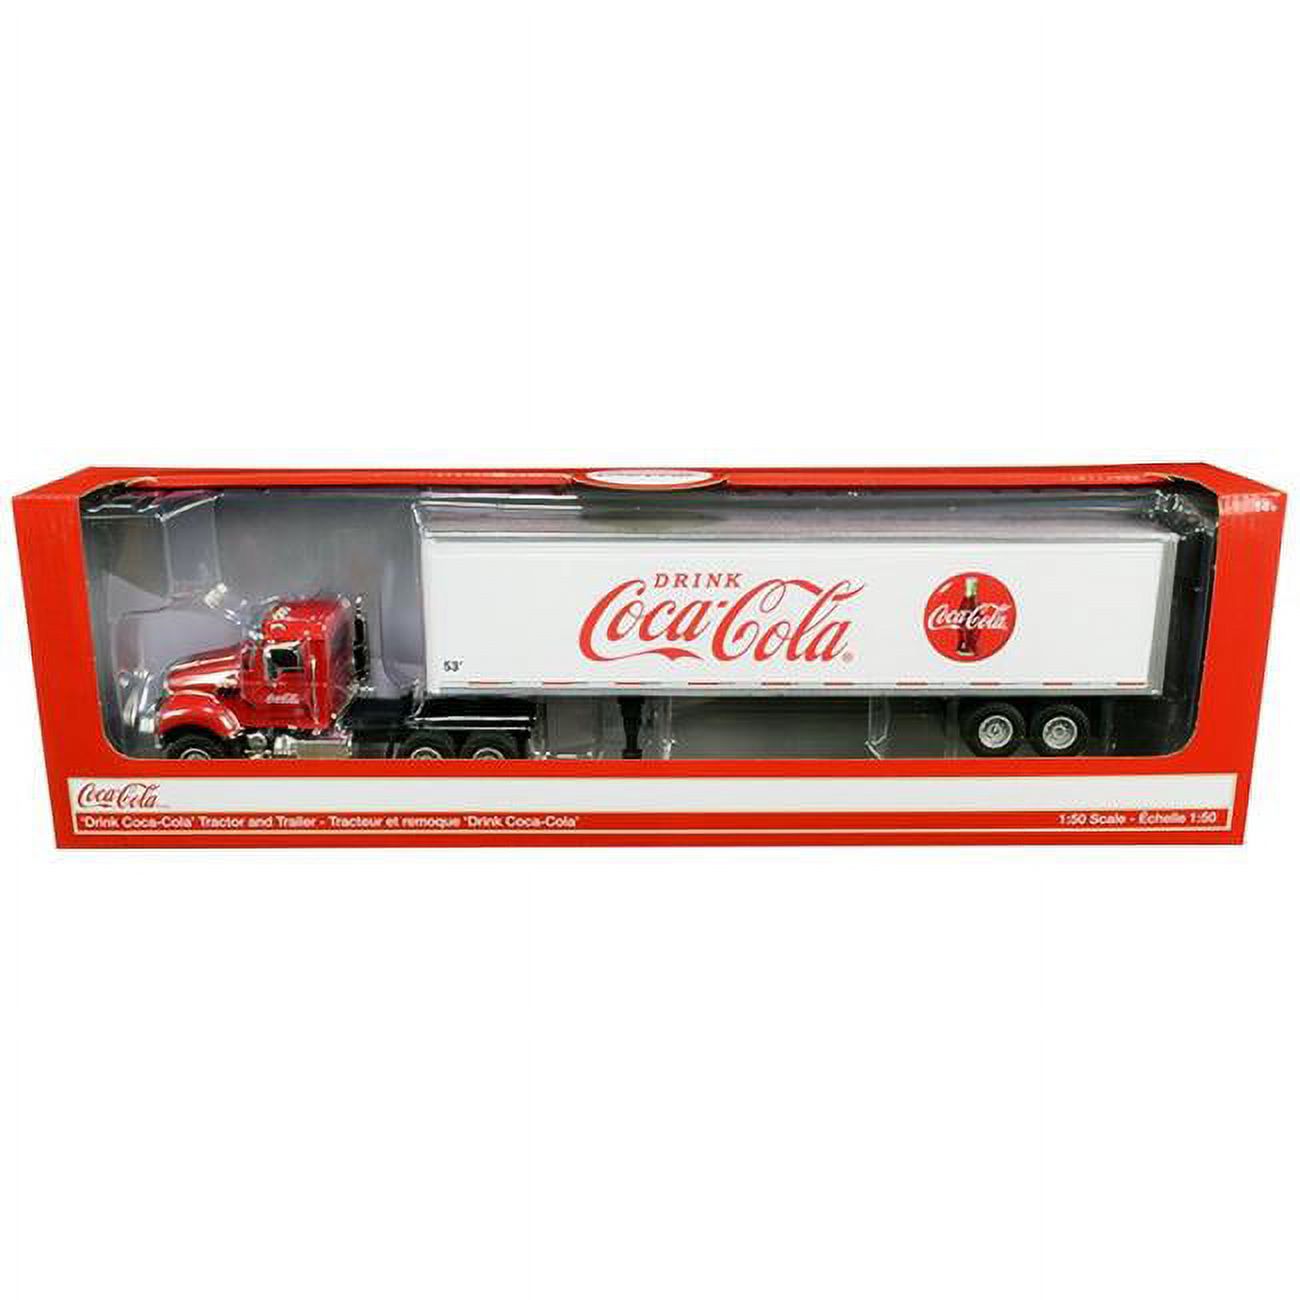 Coca-Cola 1/50 53' Coca-Cola Tractor and Trailer Collectible Toy Vehicle - image 2 of 3